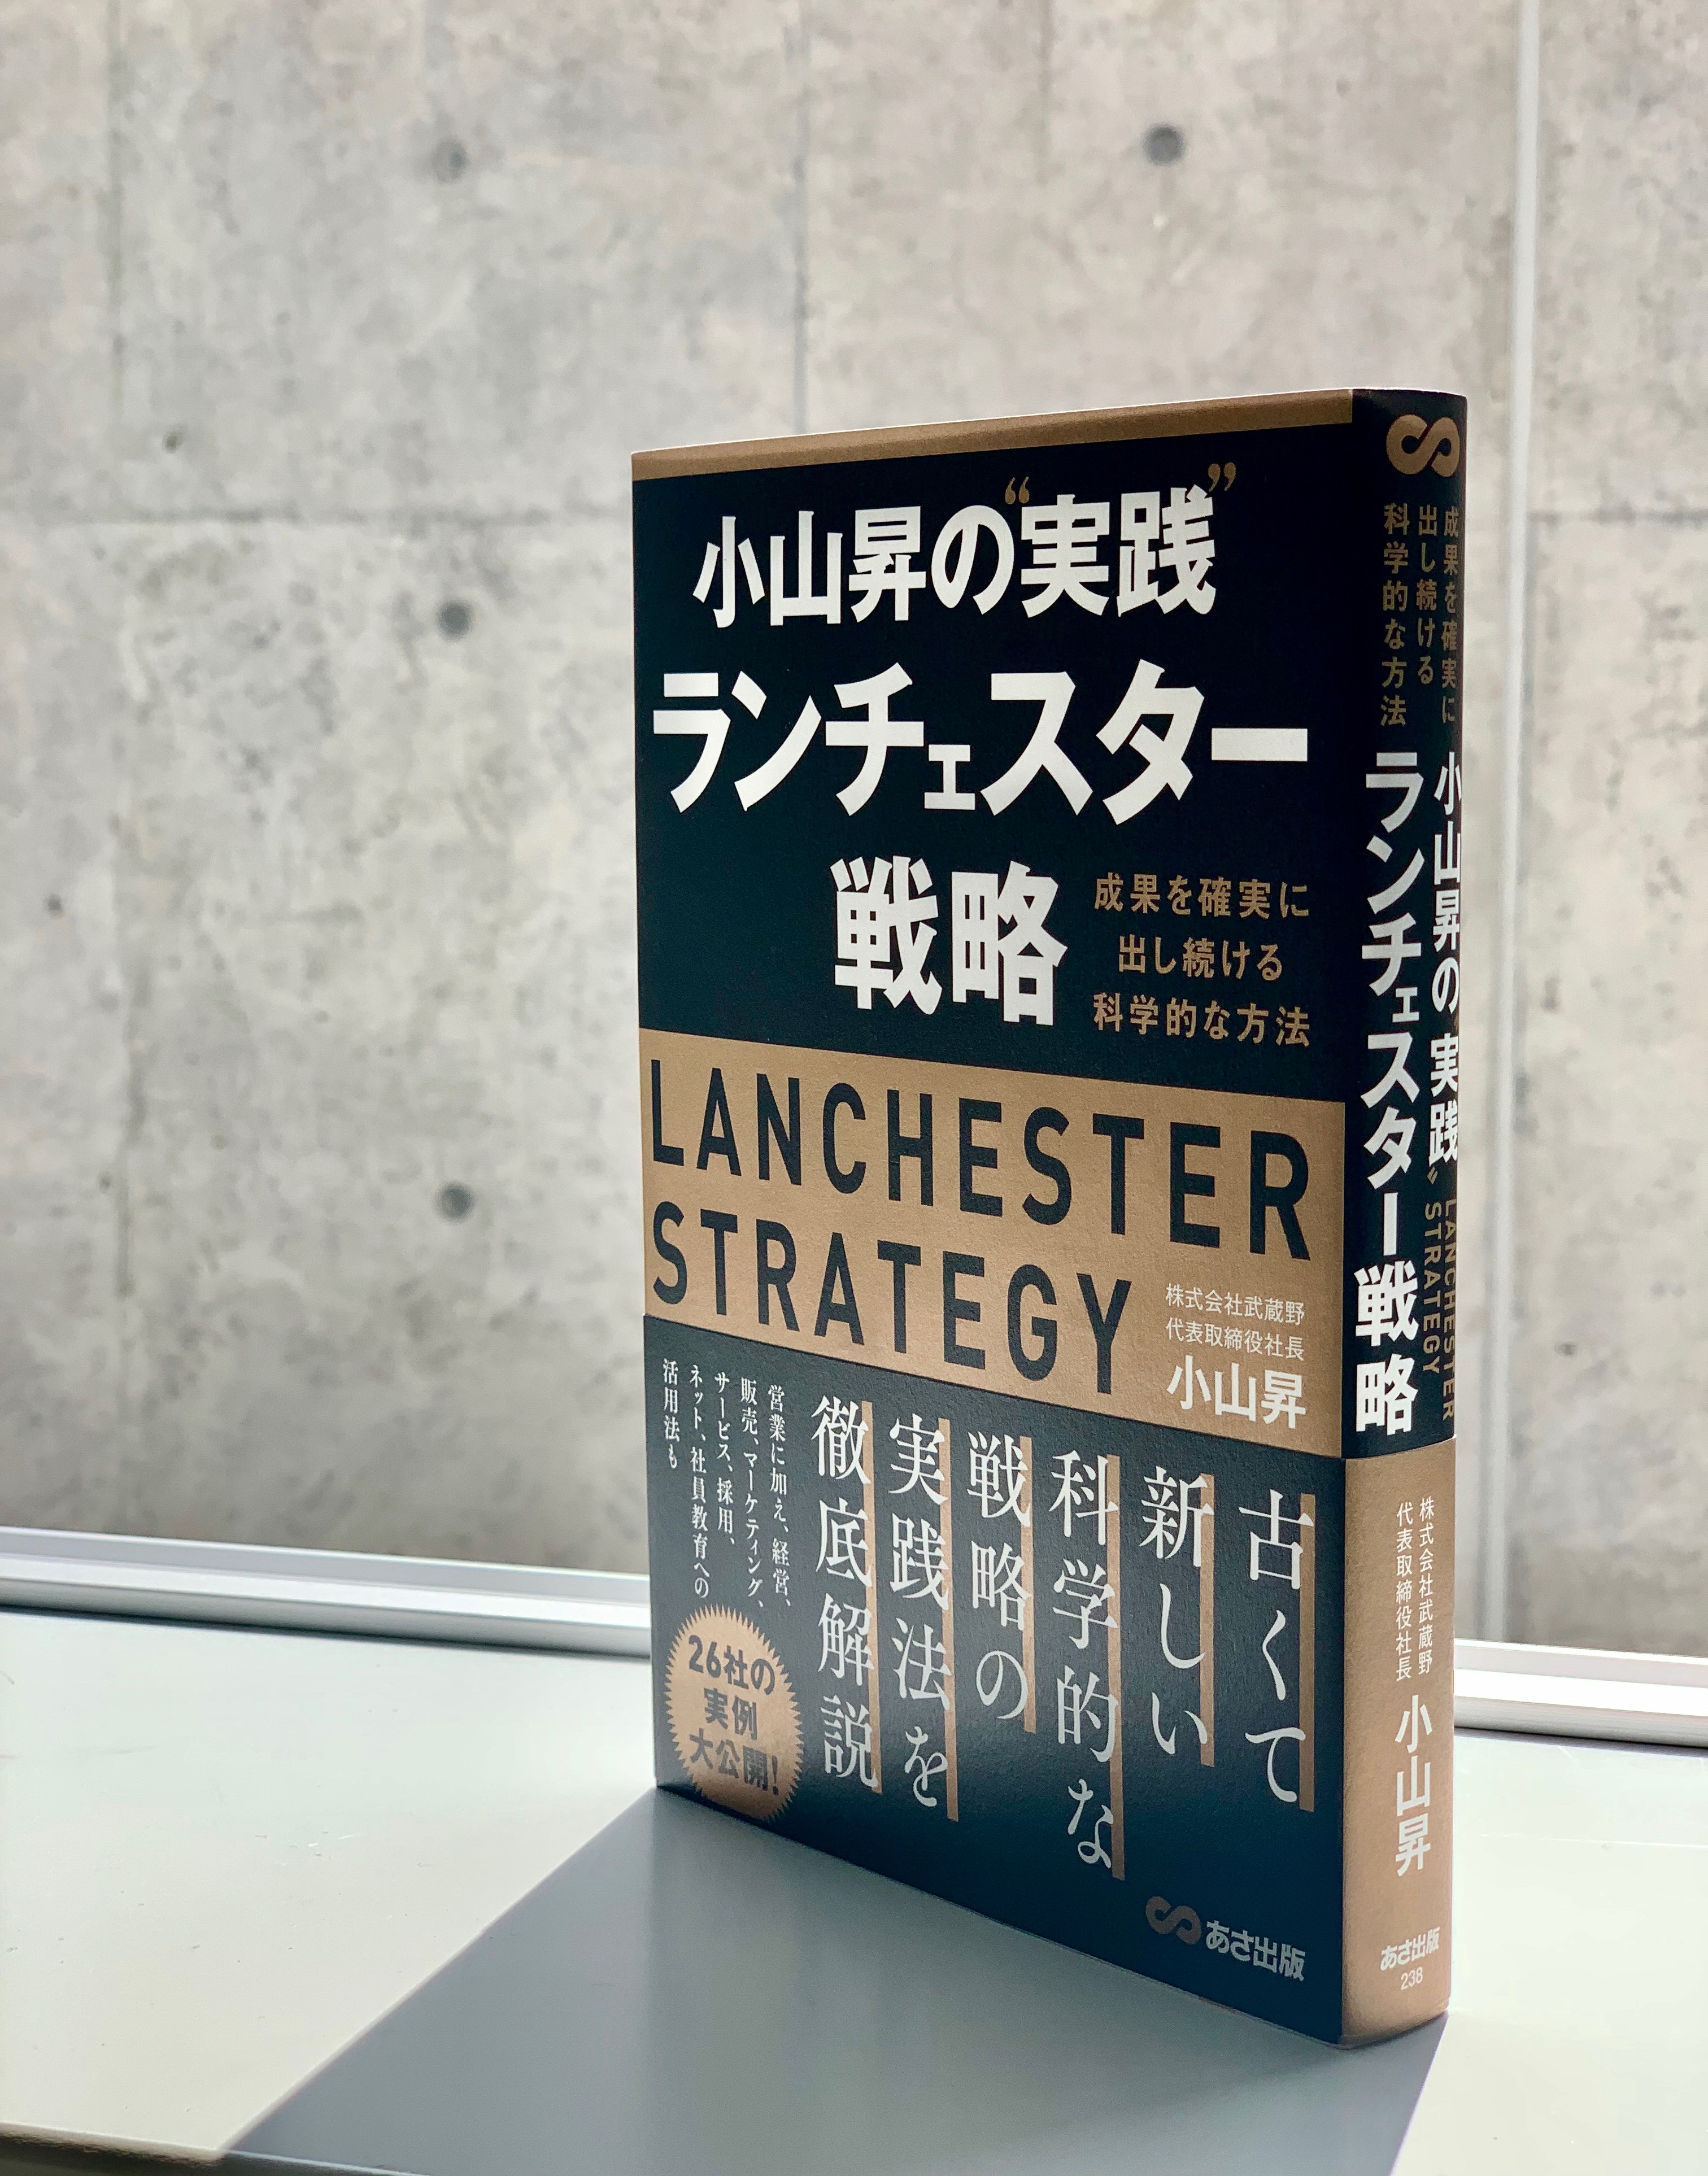 Amazonビジネス書ランキング1位獲得【新刊】『小山昇の“実践”ランチェスター戦略』10月6日(火)発売！